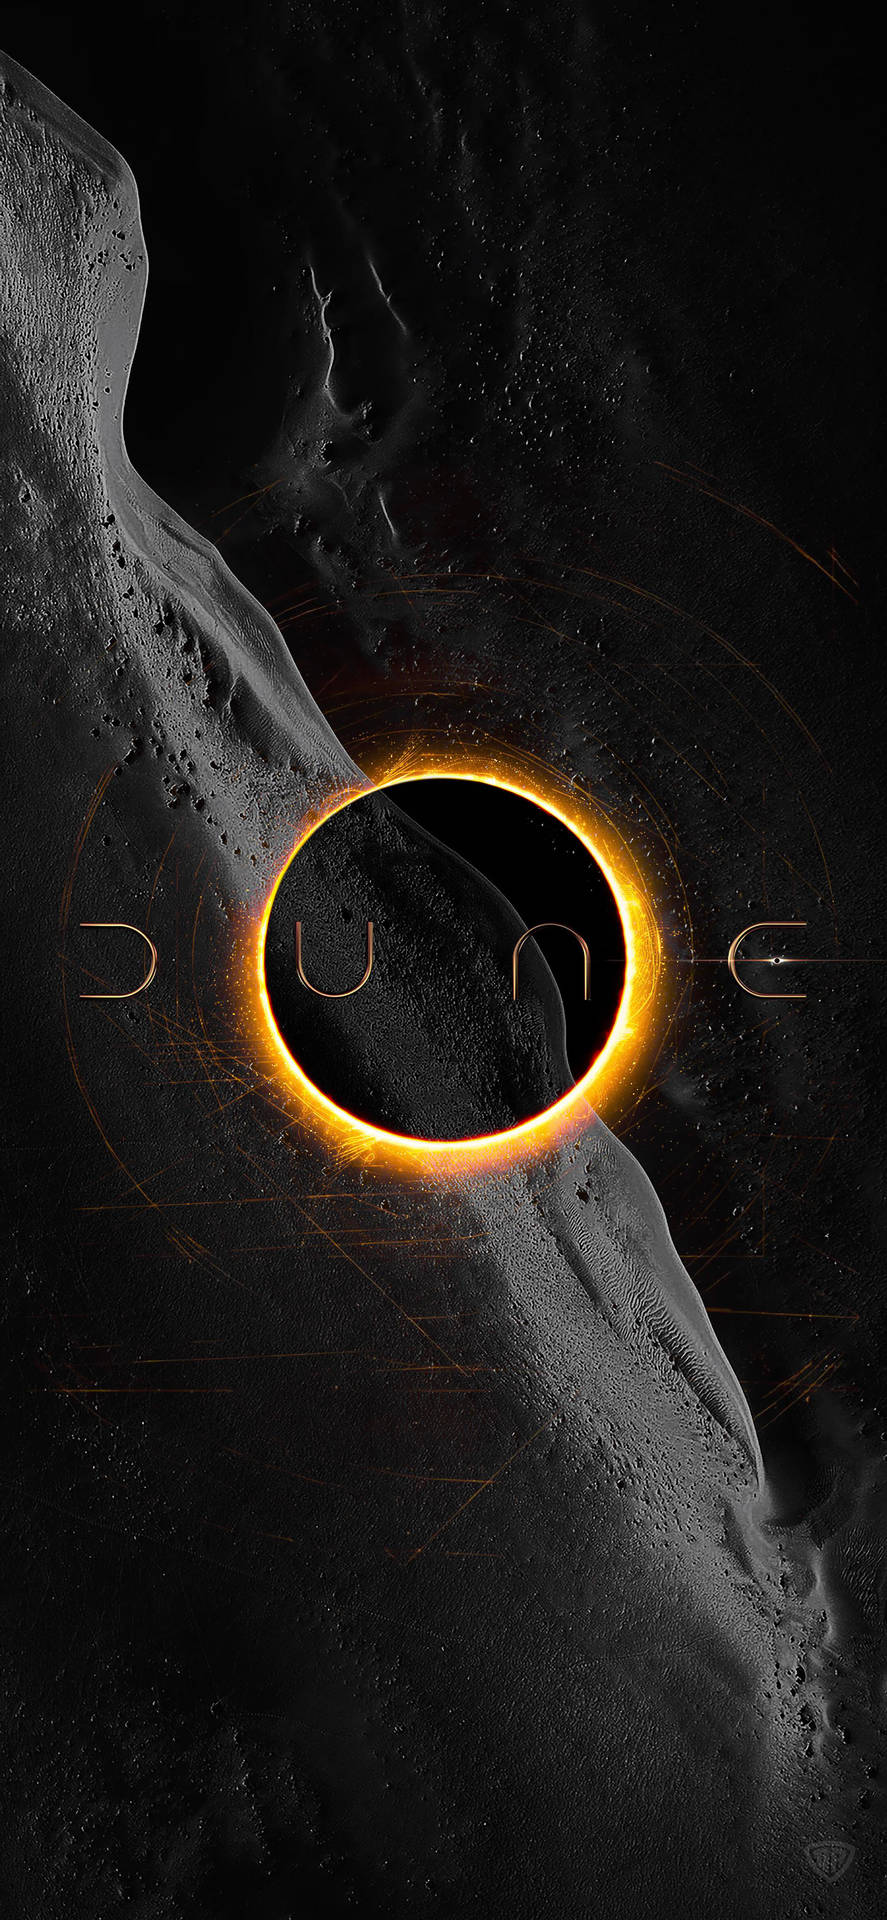 Dune 2021 Movie Eclipse Poster Wallpaper